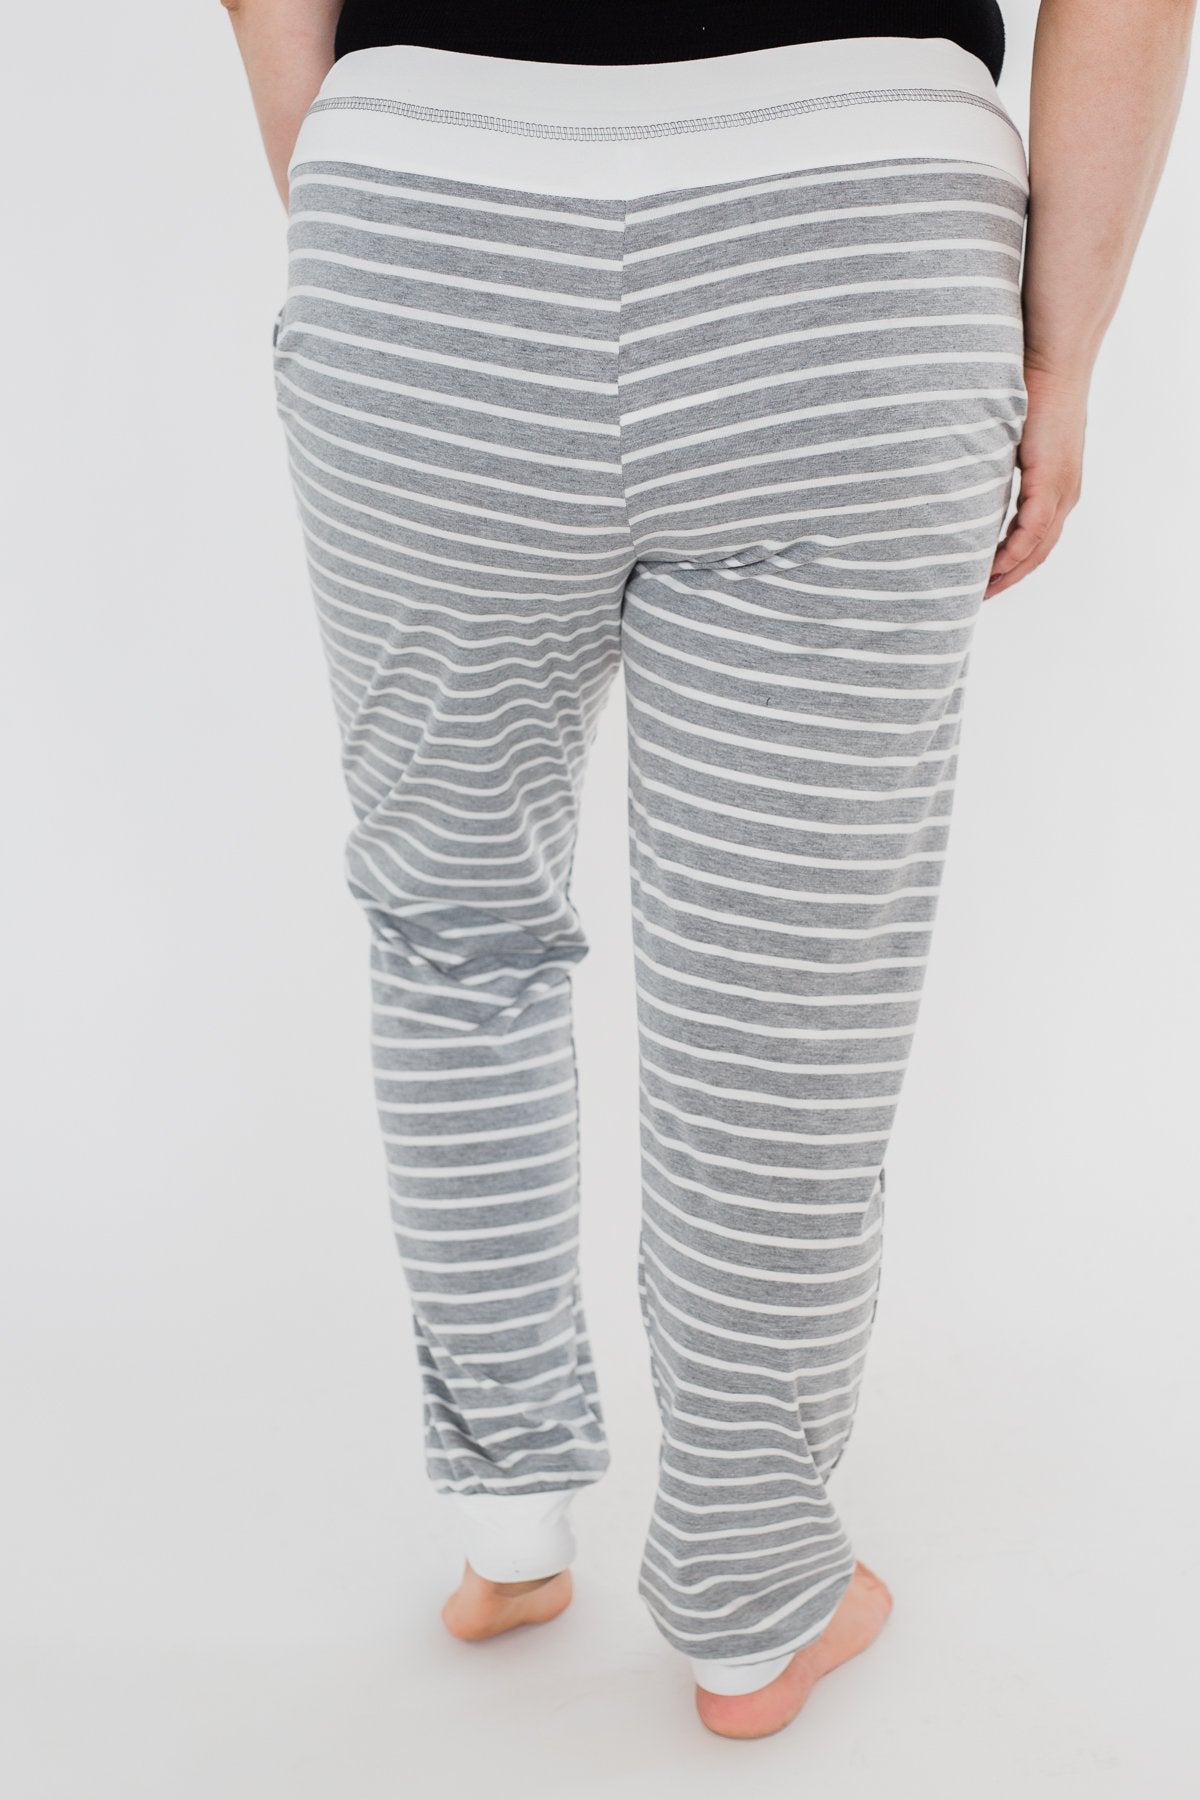 Cozy Striped Joggers- Heather Grey & Ivory